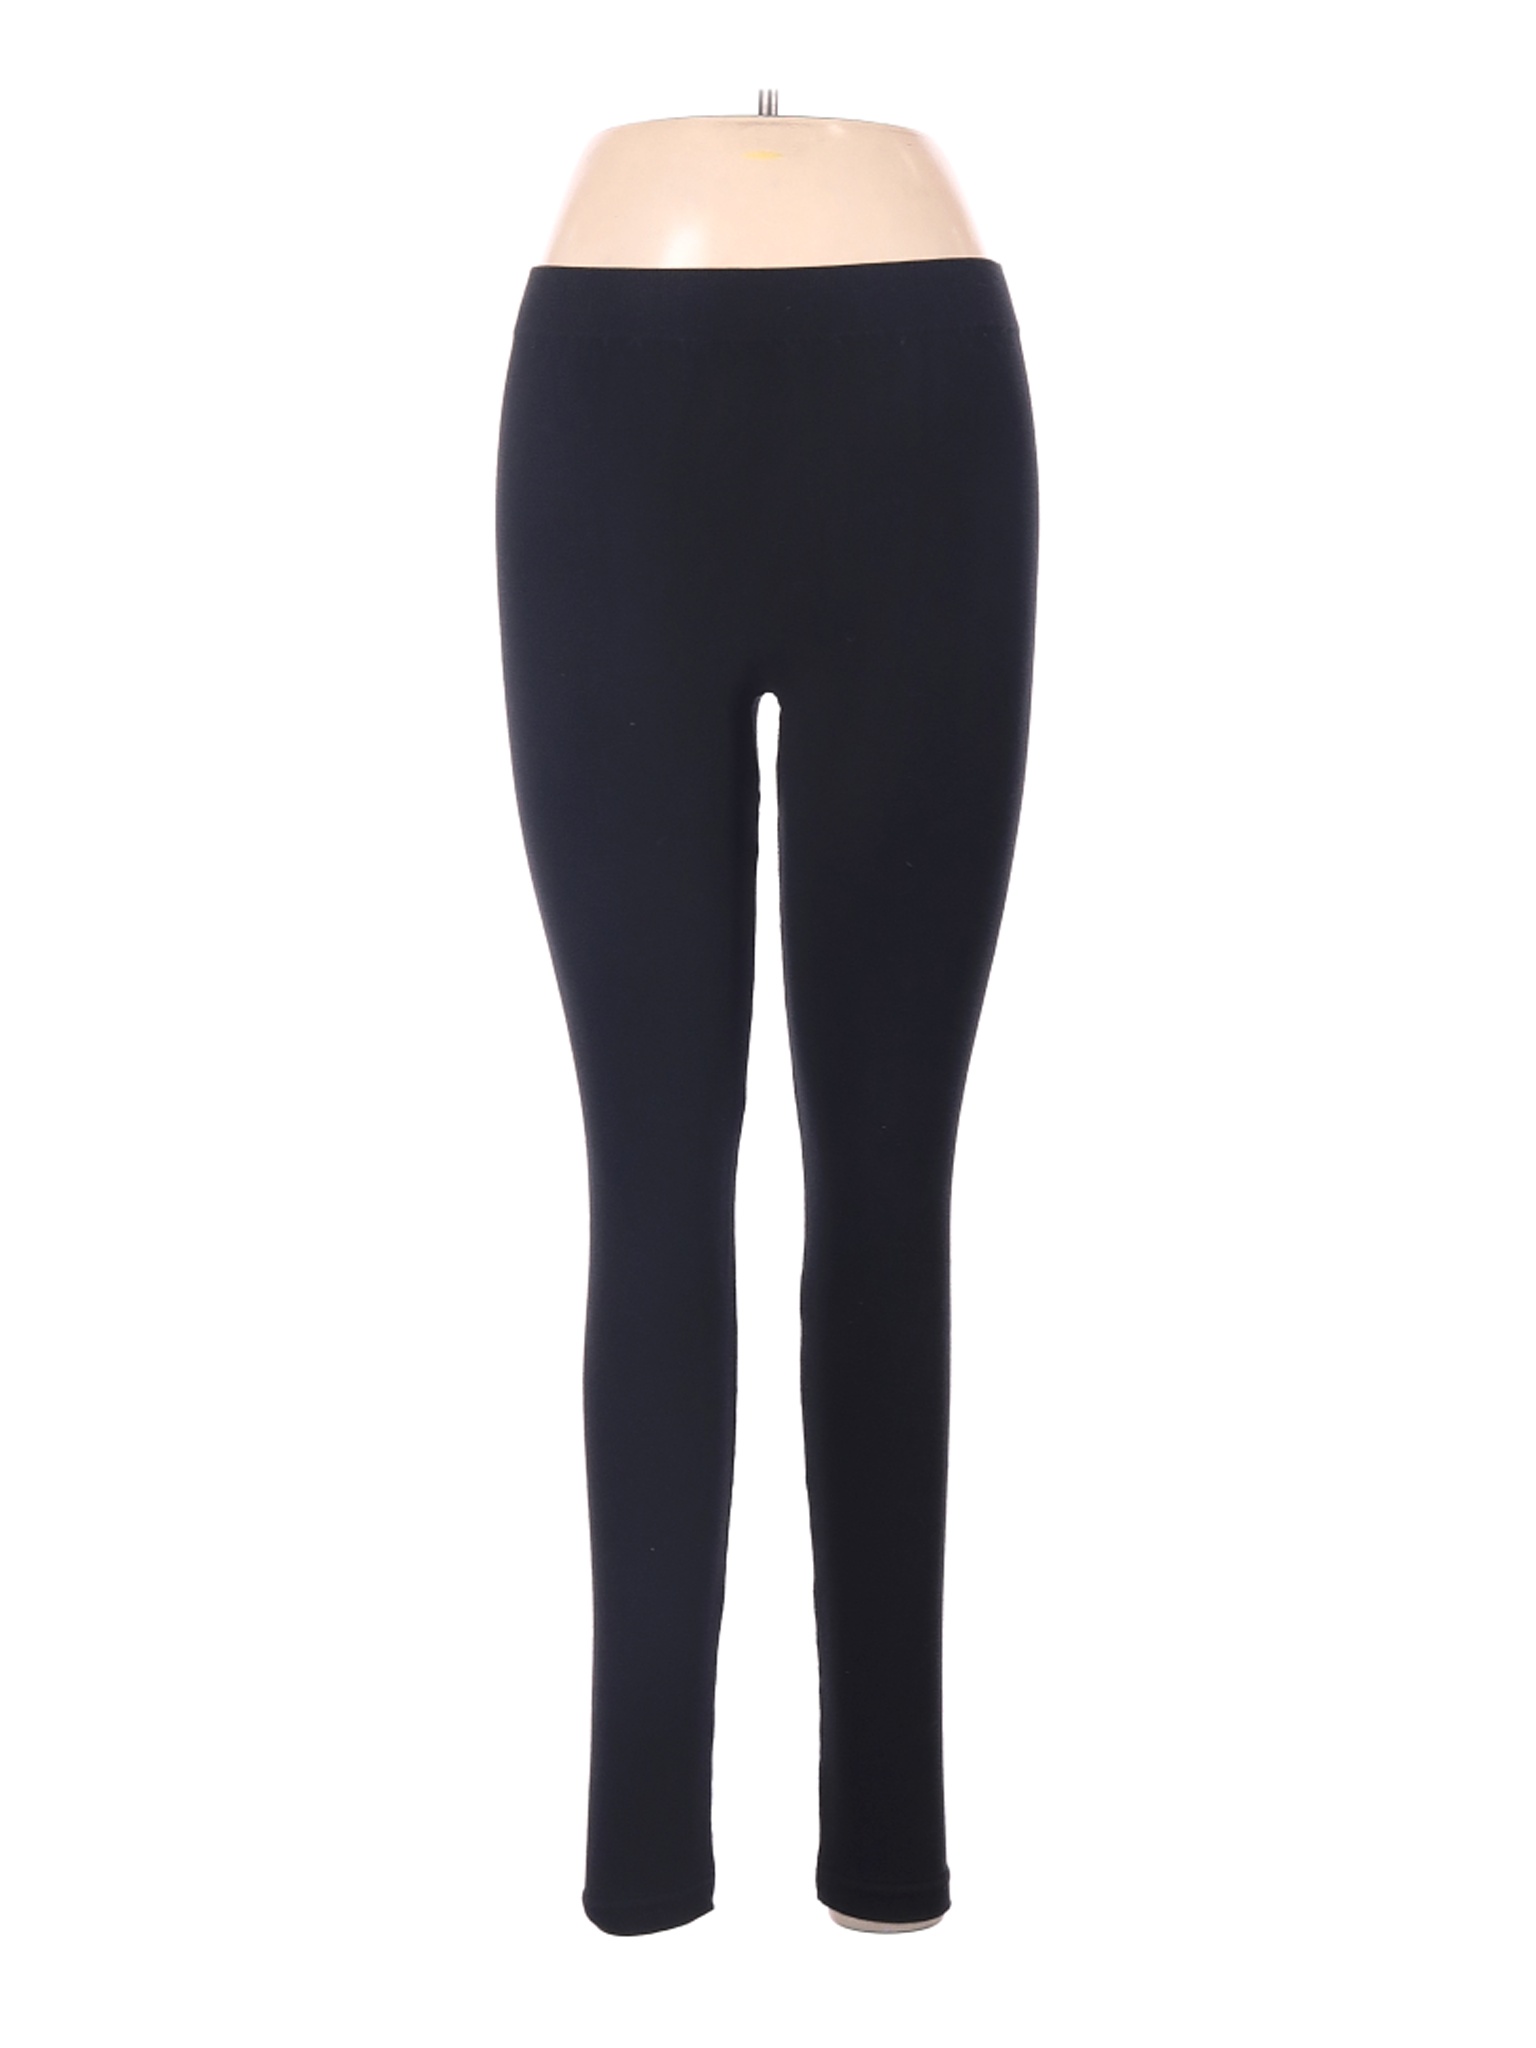 Sophie Max Women Black Casual Pants M | eBay